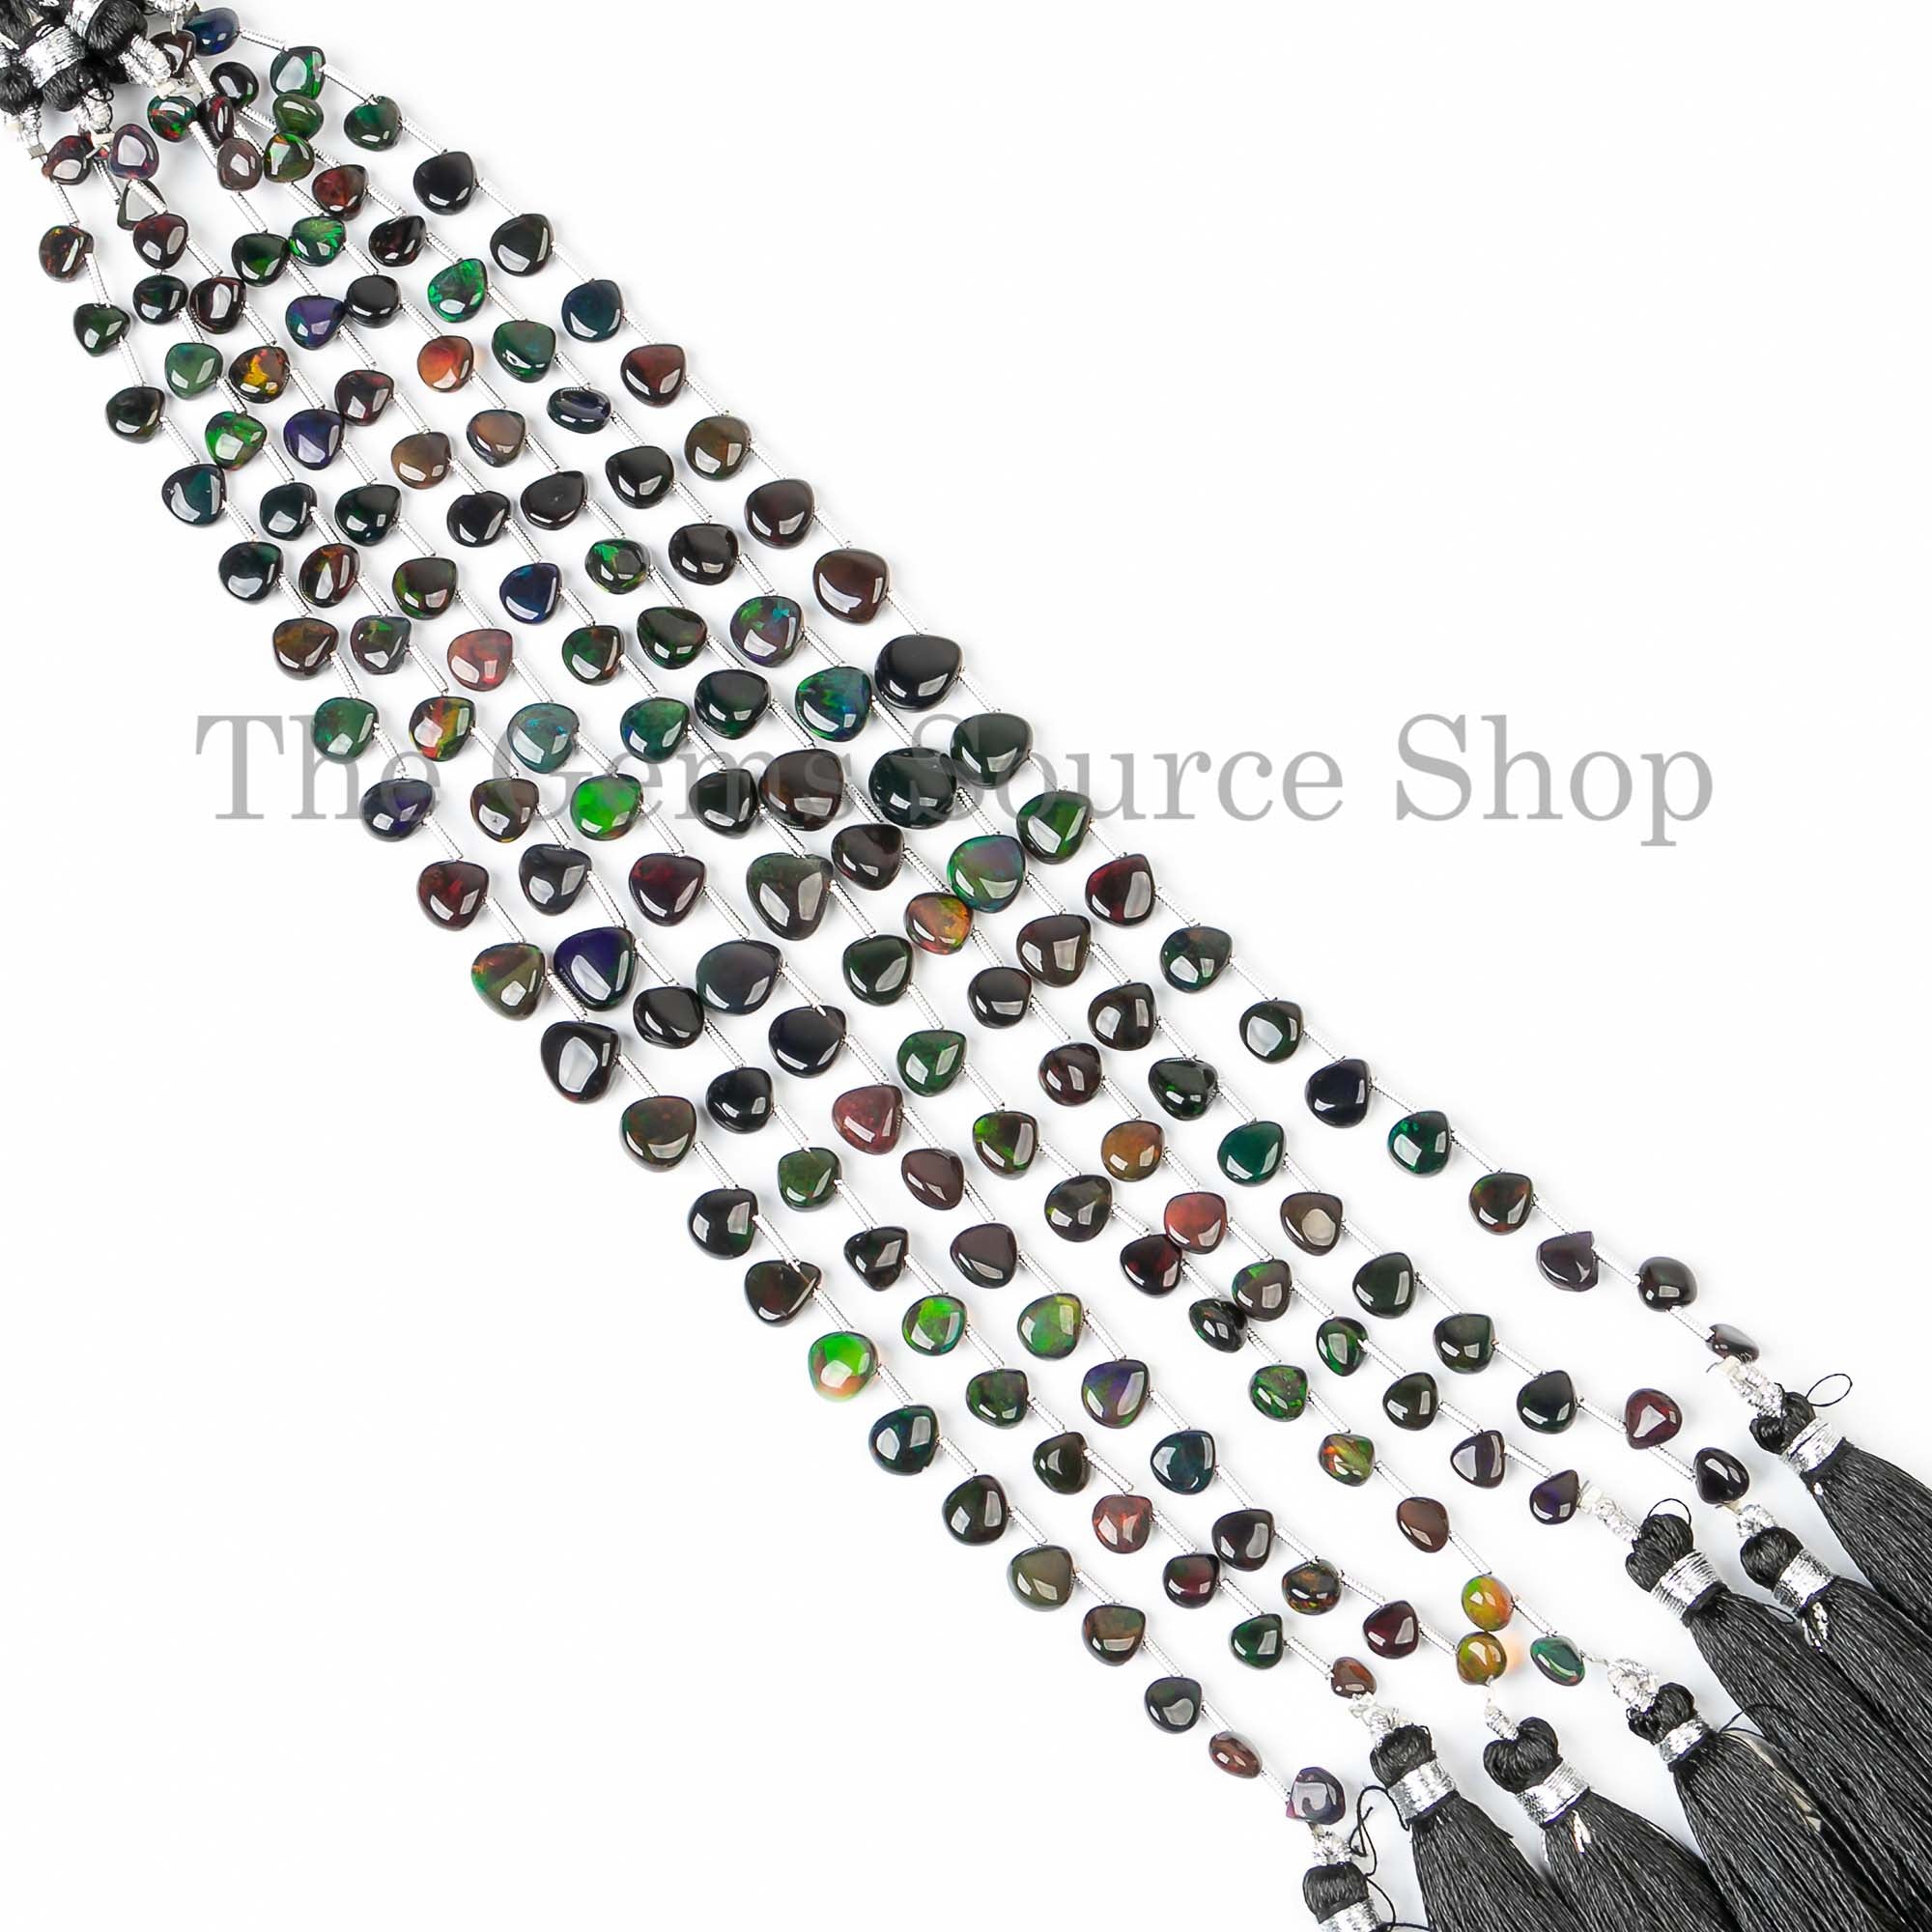 Black Ethiopian Opal Plain Heart Beads, Black Opal Beads, Black Ethiopian Opal Heart Beads